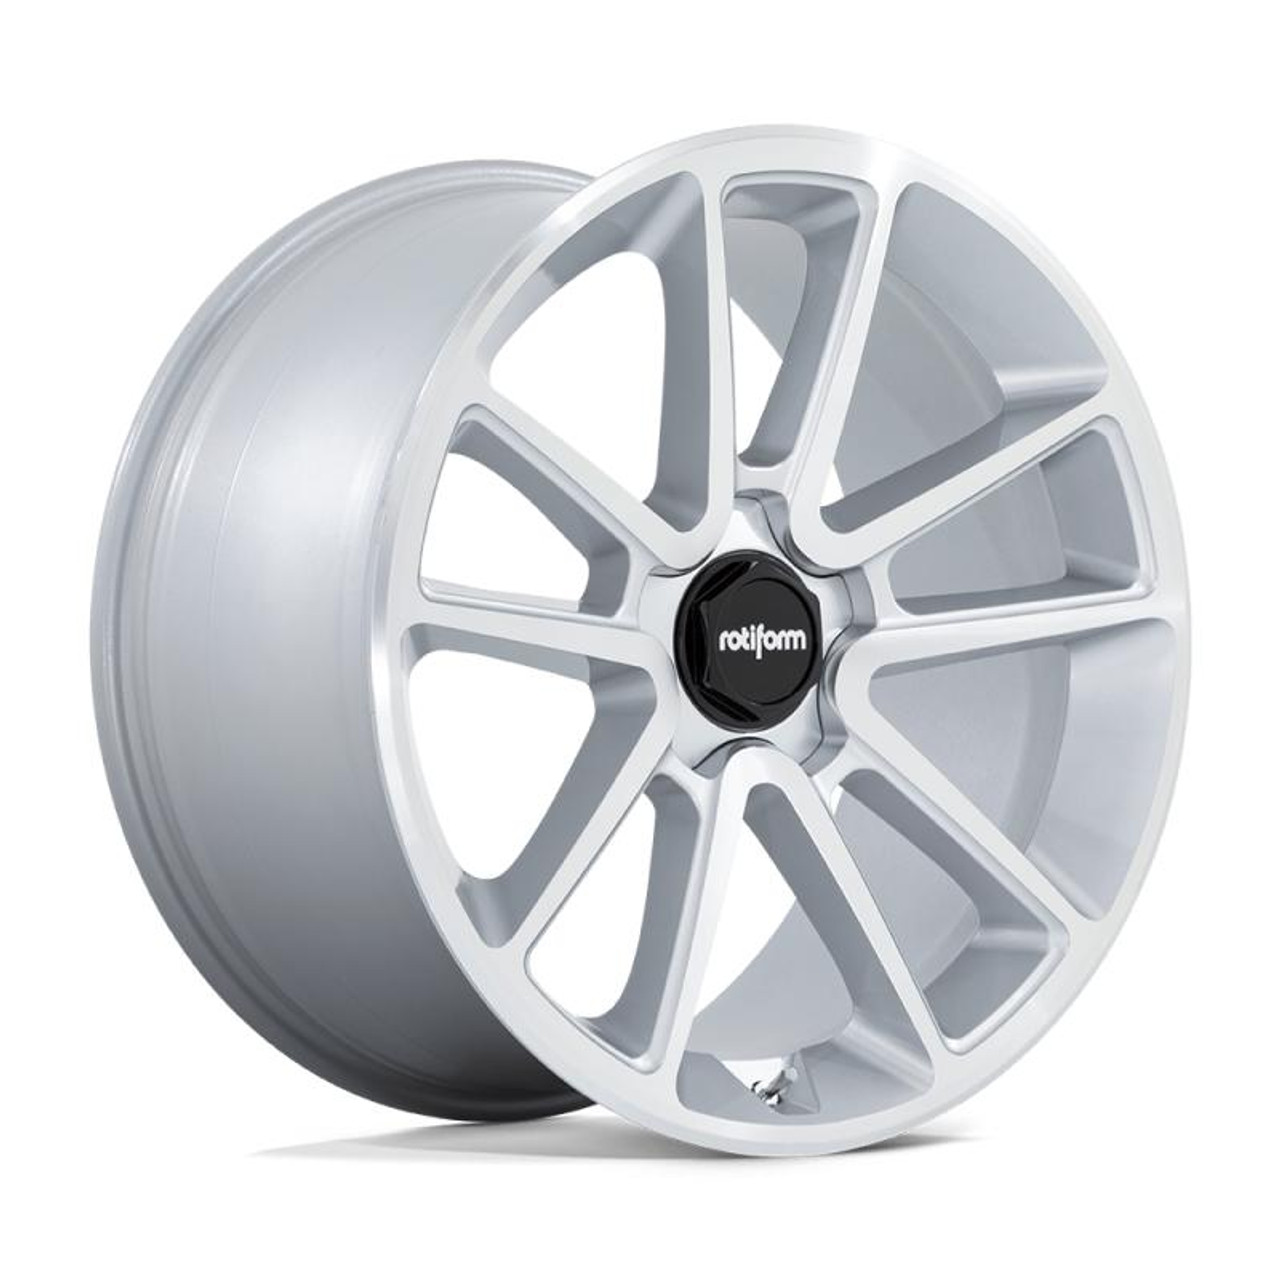  Rotiform R192 BTL Wheel 21x10.5 5x114.3 45 Offset - Gloss Silver w/ Machined Face - R192210565+45 